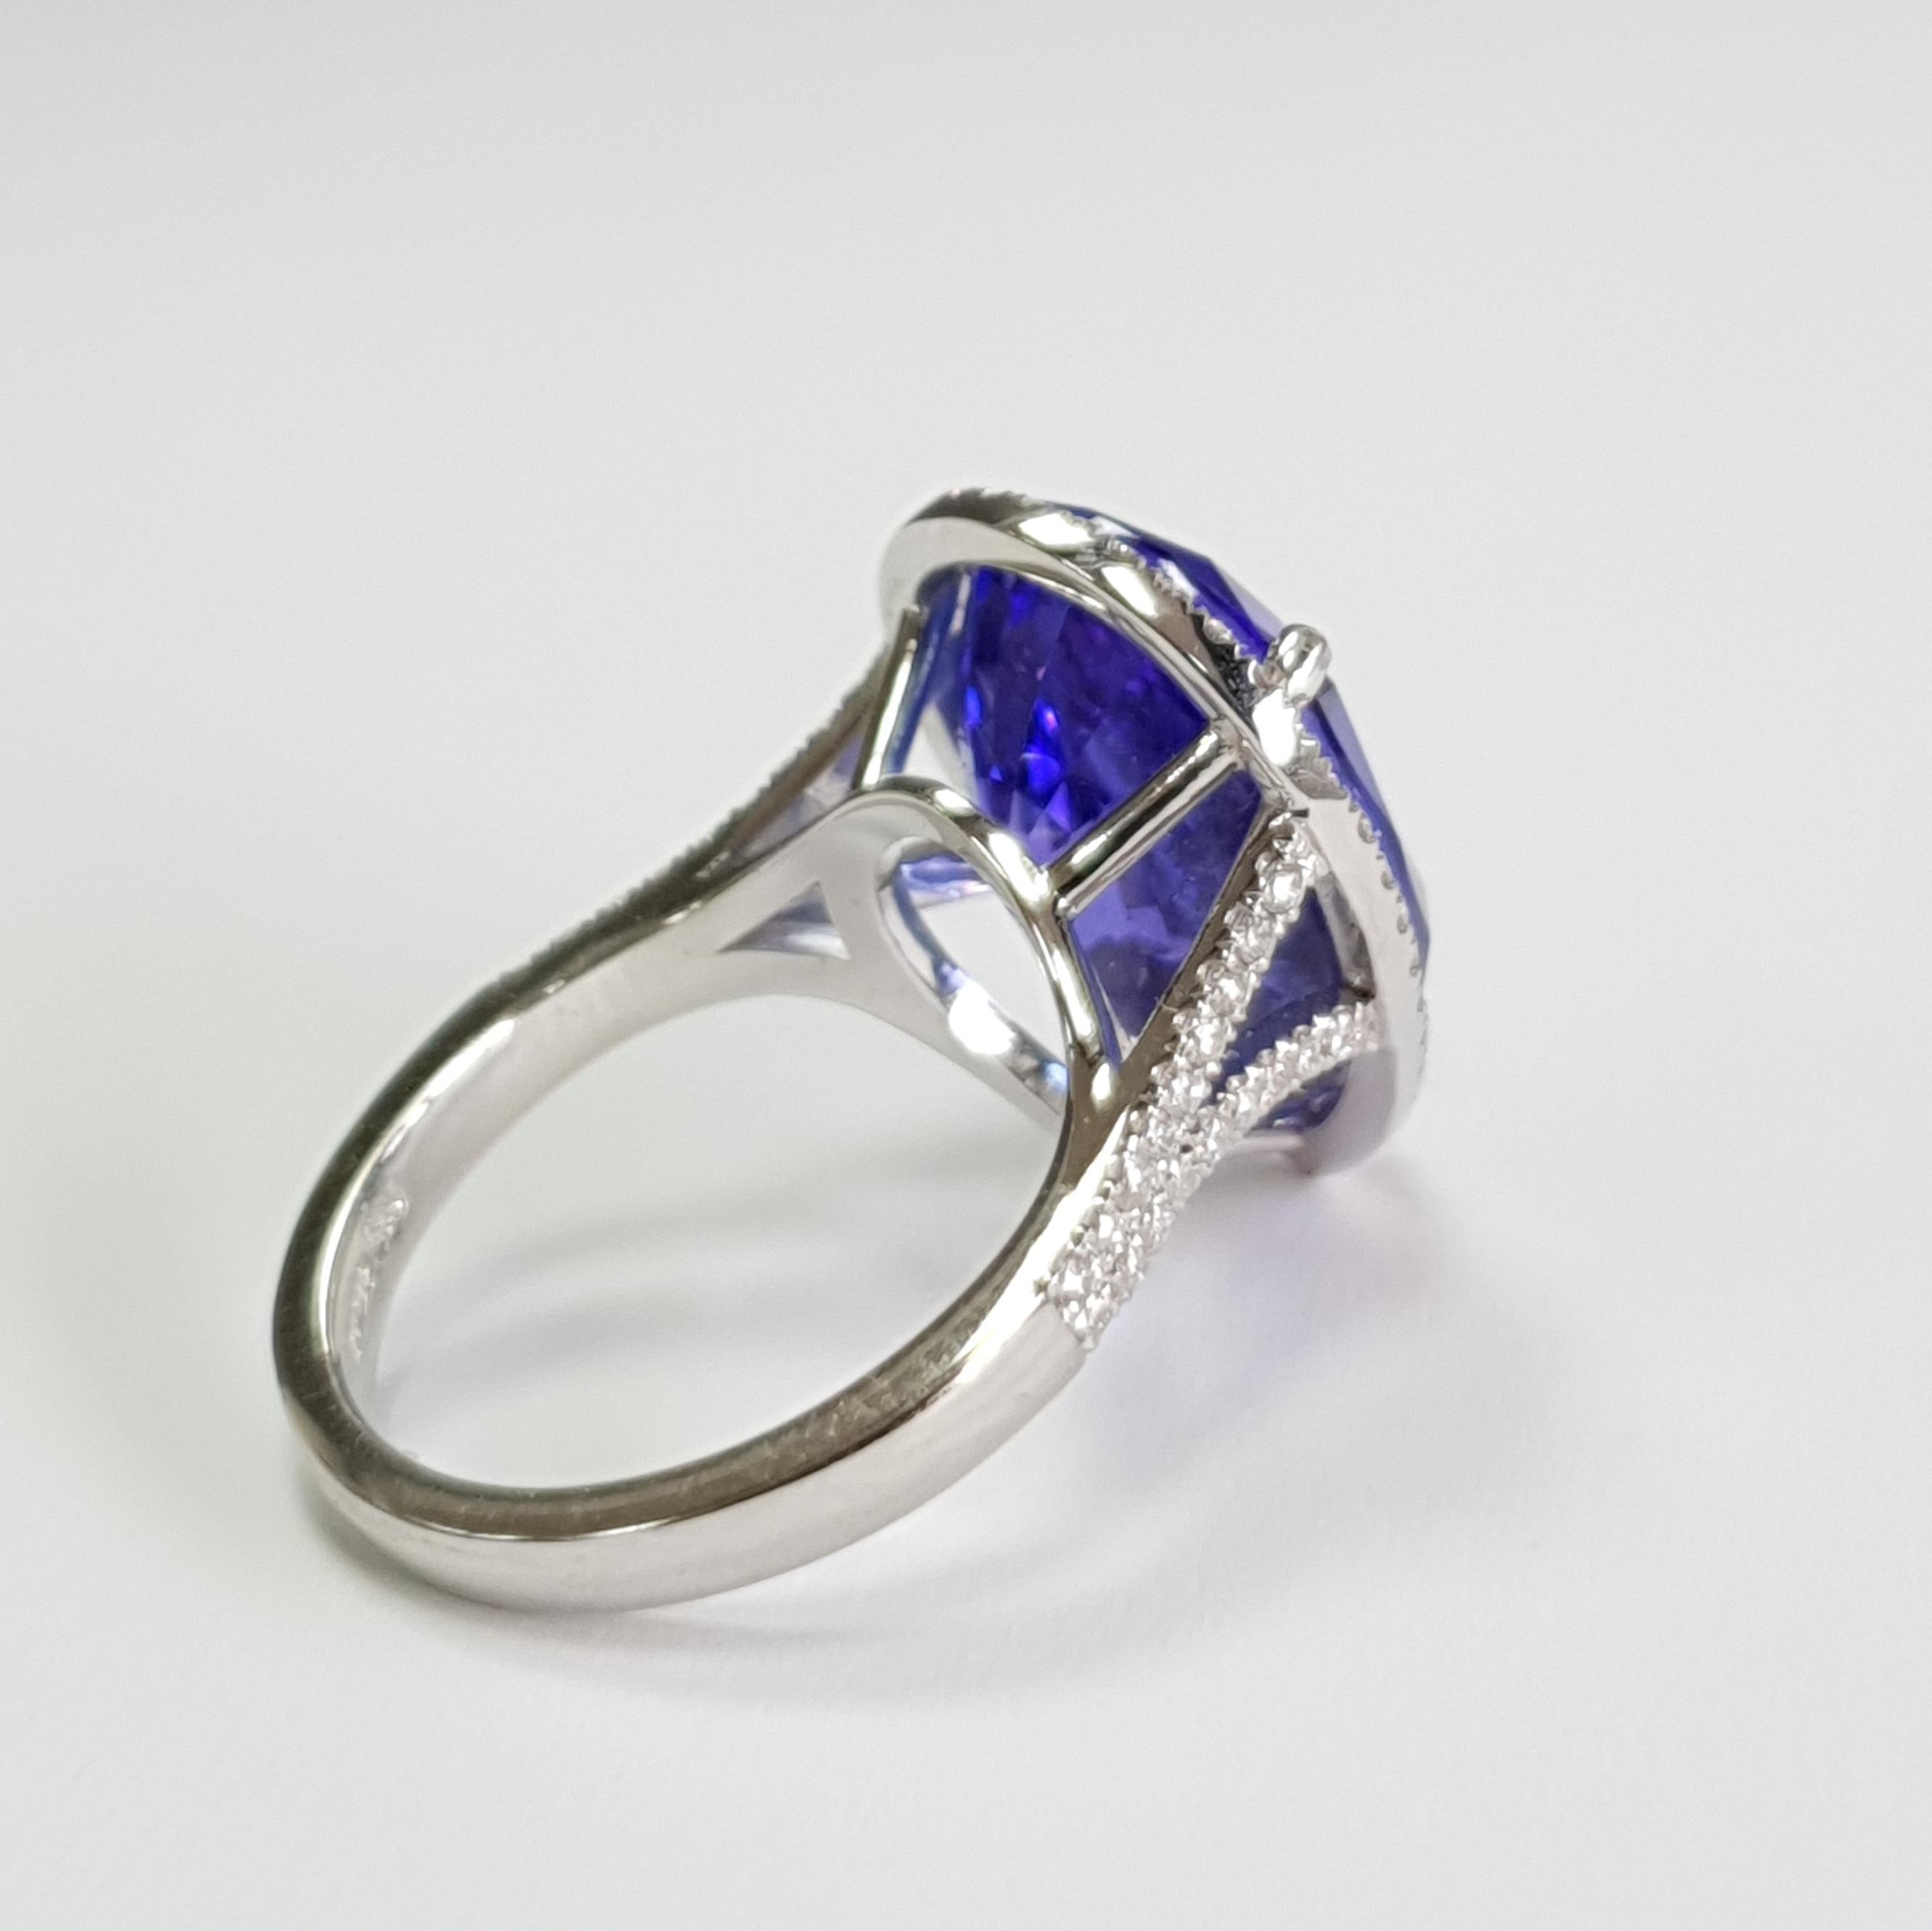 Marcel Salloum Rare Blue 10 Ct Pear Tanzanite Diamond Engagement Ring Platinum In New Condition For Sale In London, London